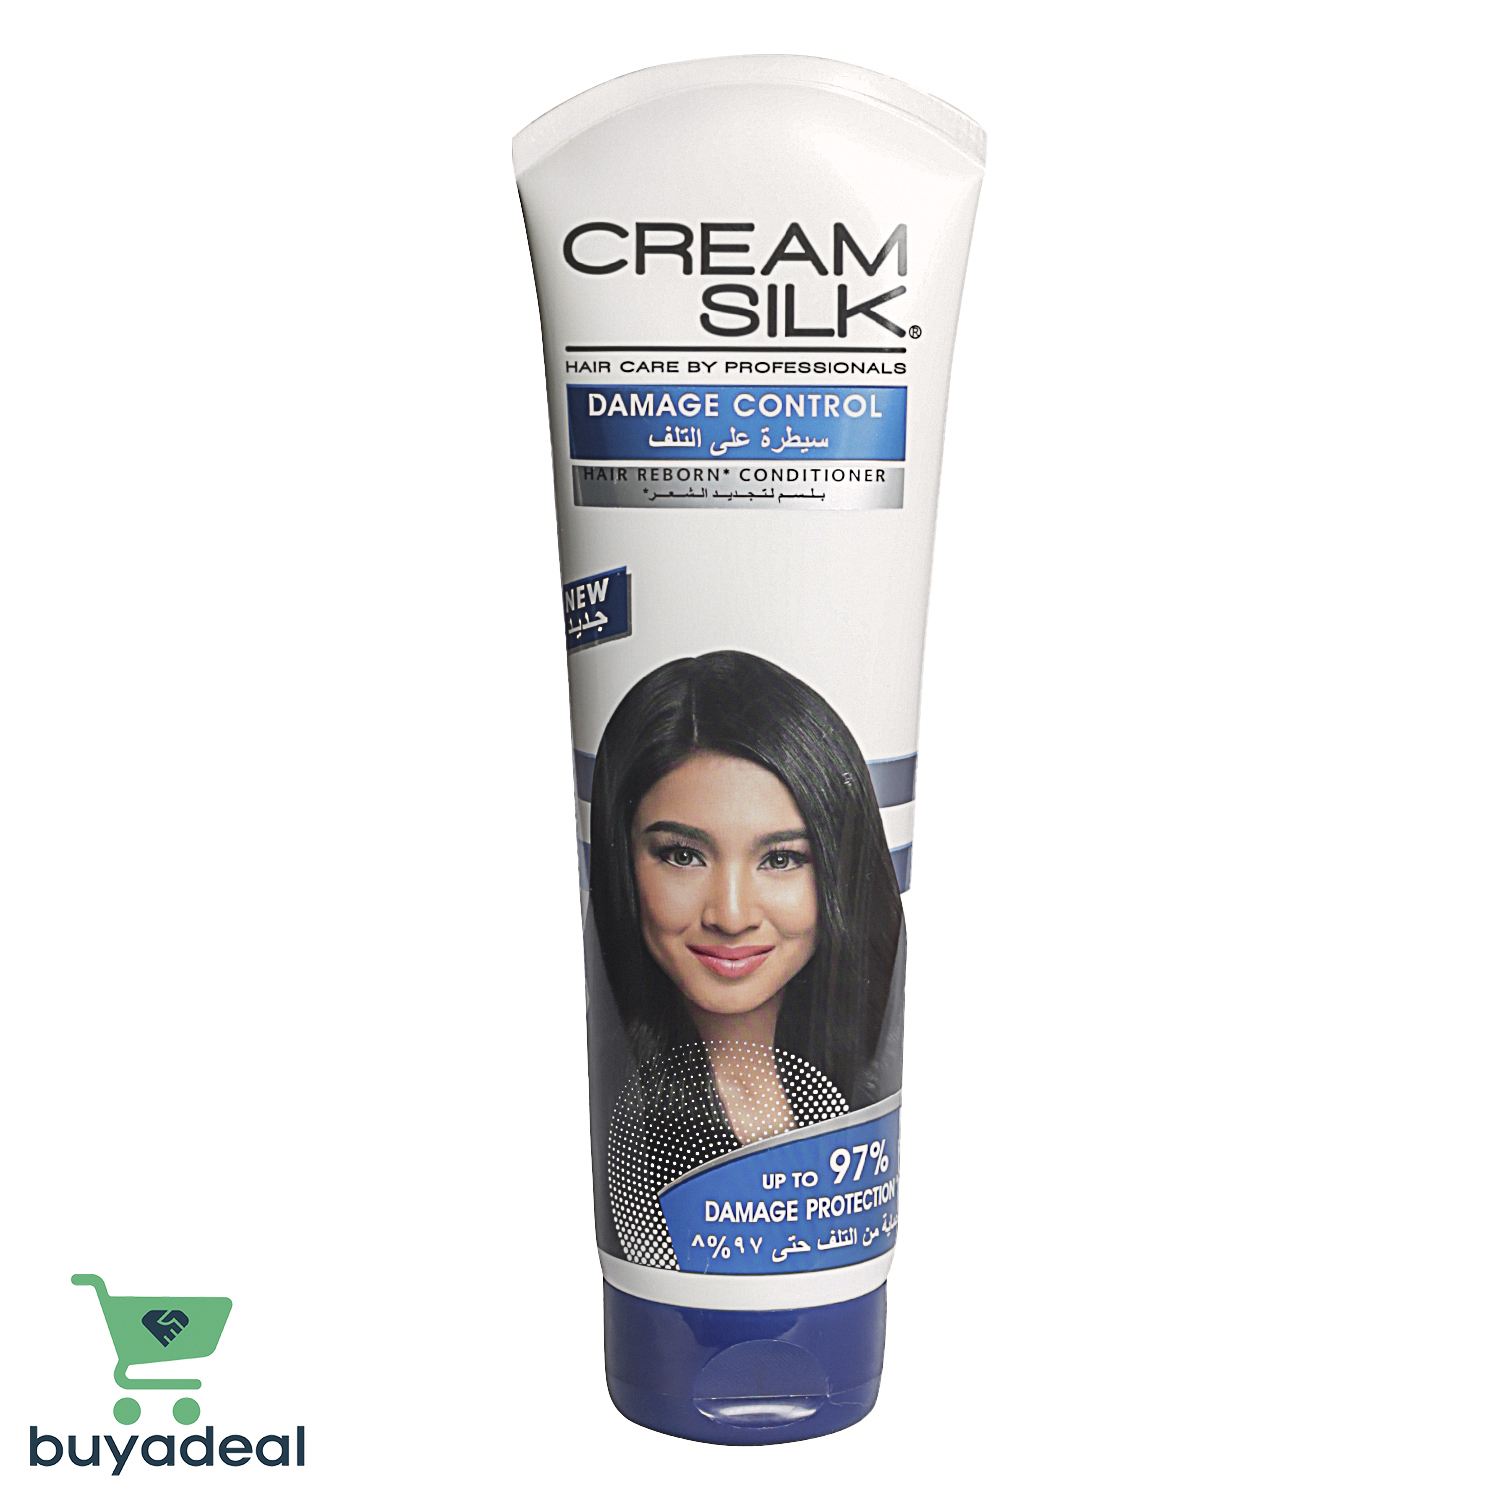 Buyadeal Product Cream Silk Damage Control Conditioner - 280ml